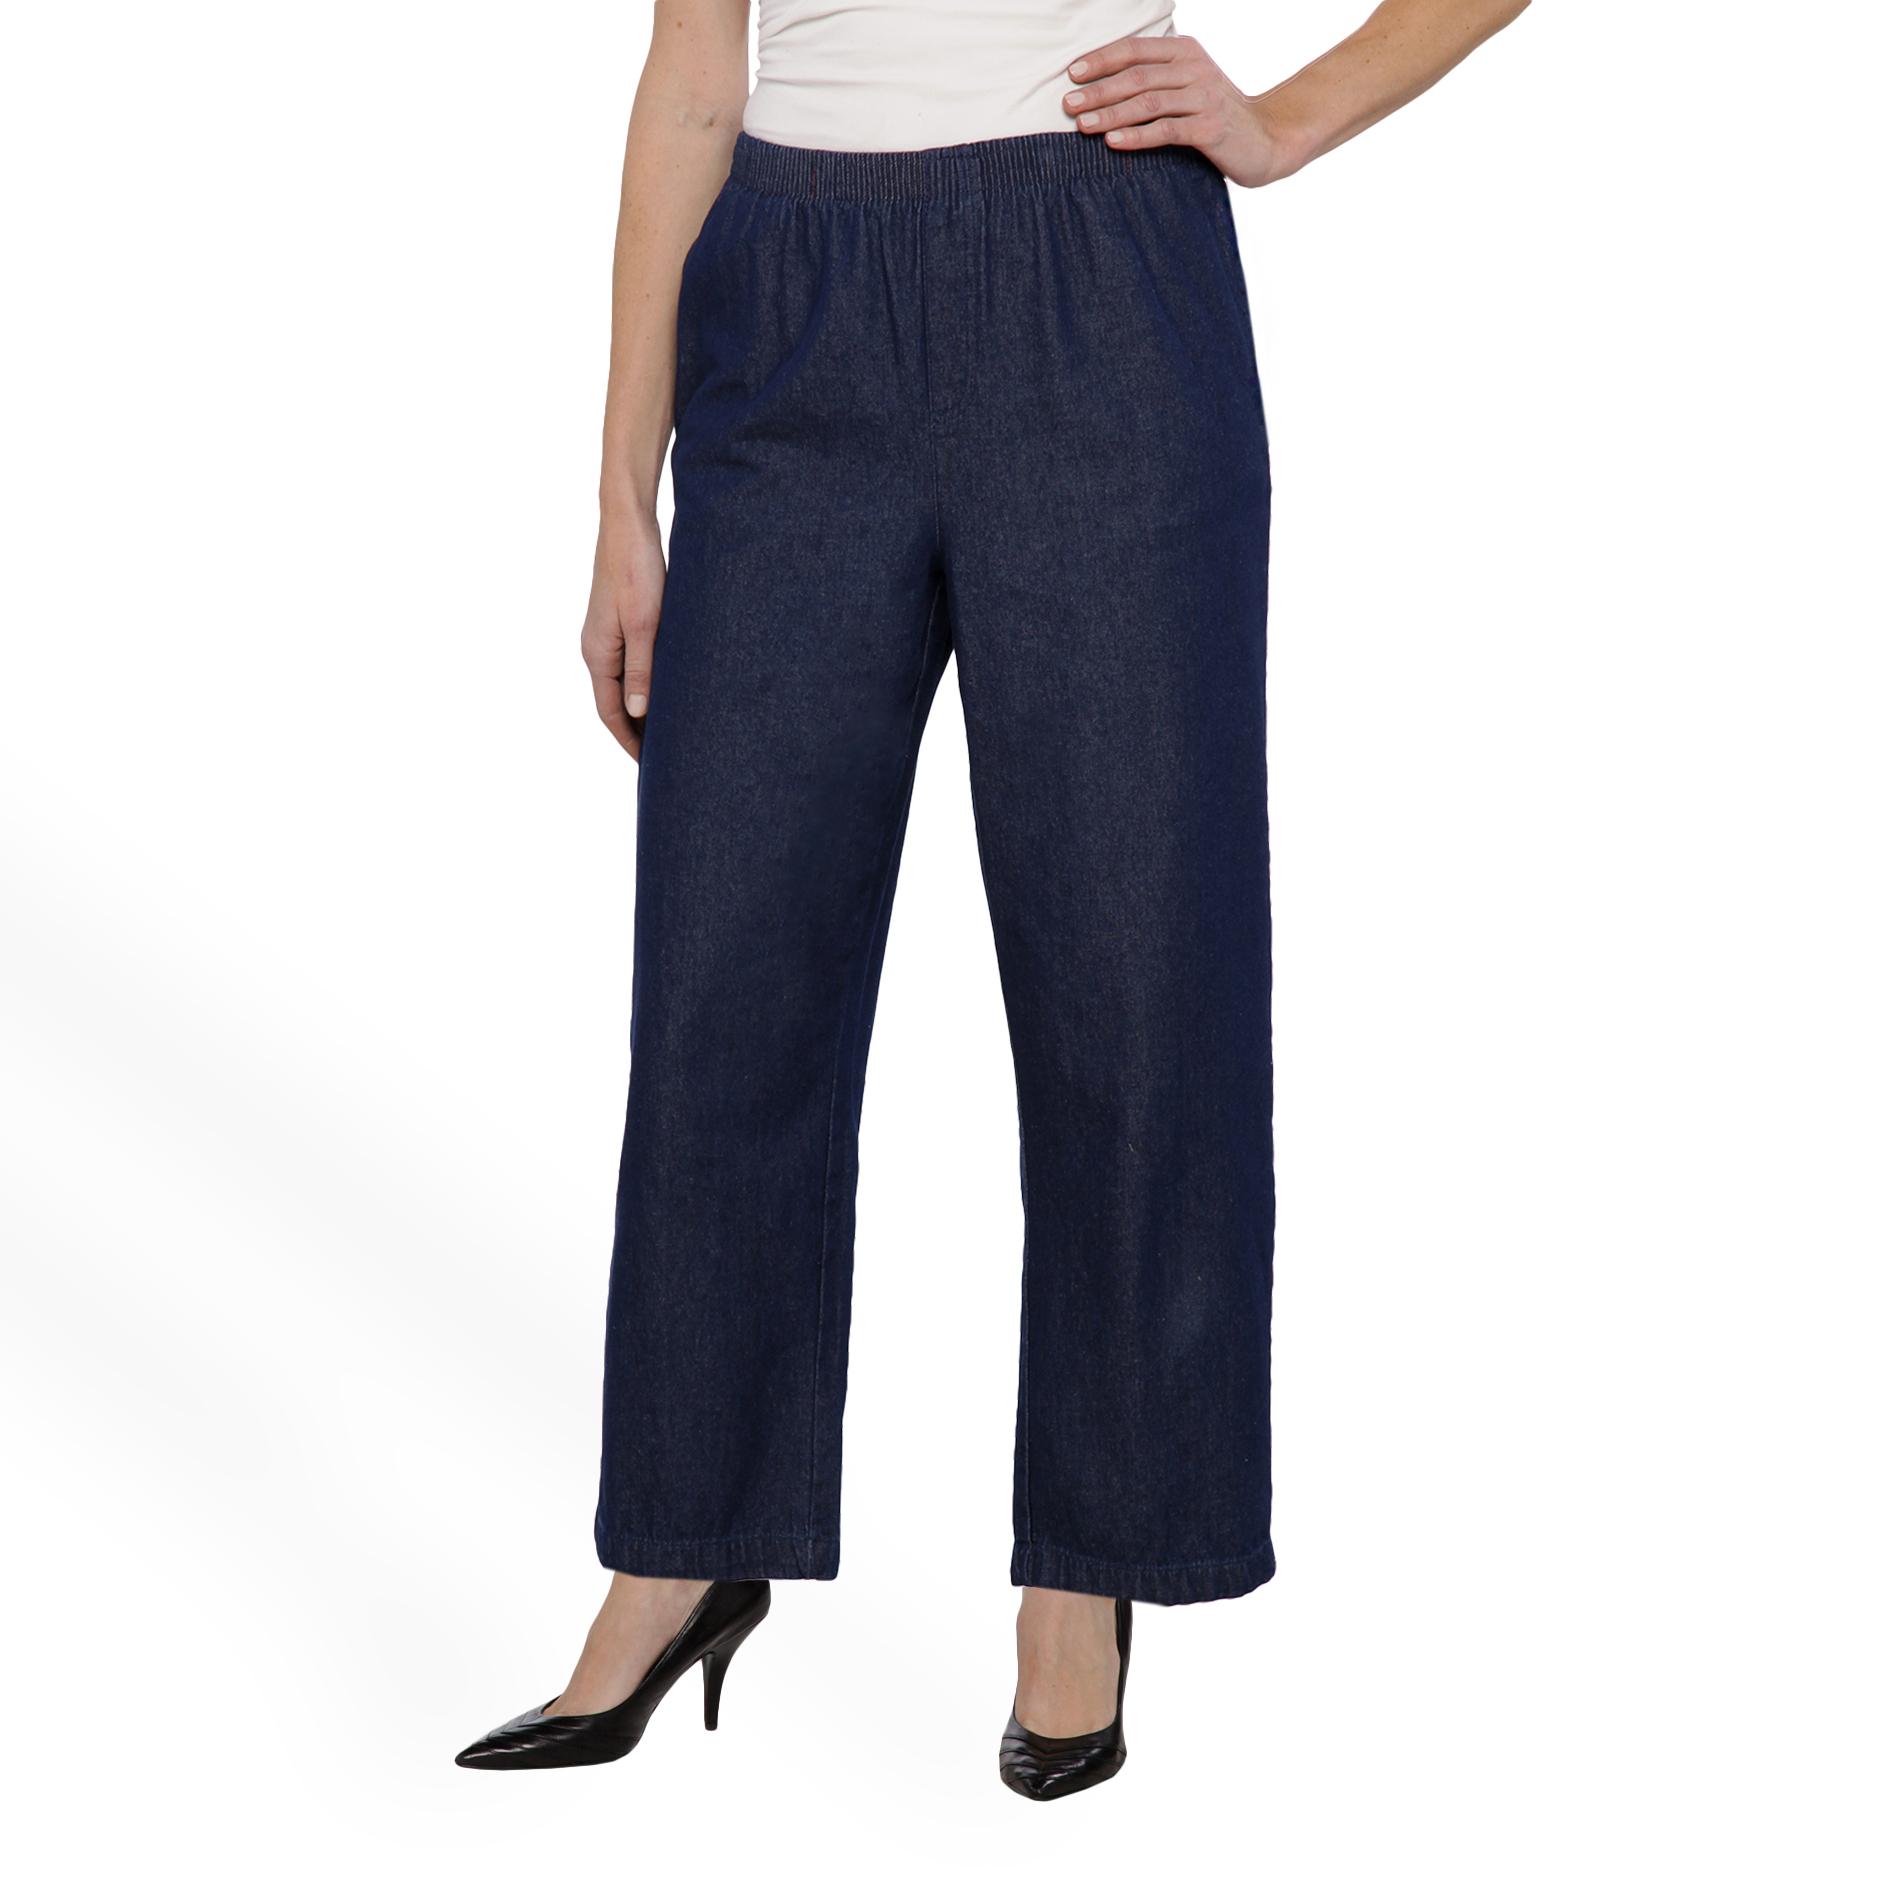 Basic Editions Women's Pull-On Denim Pants